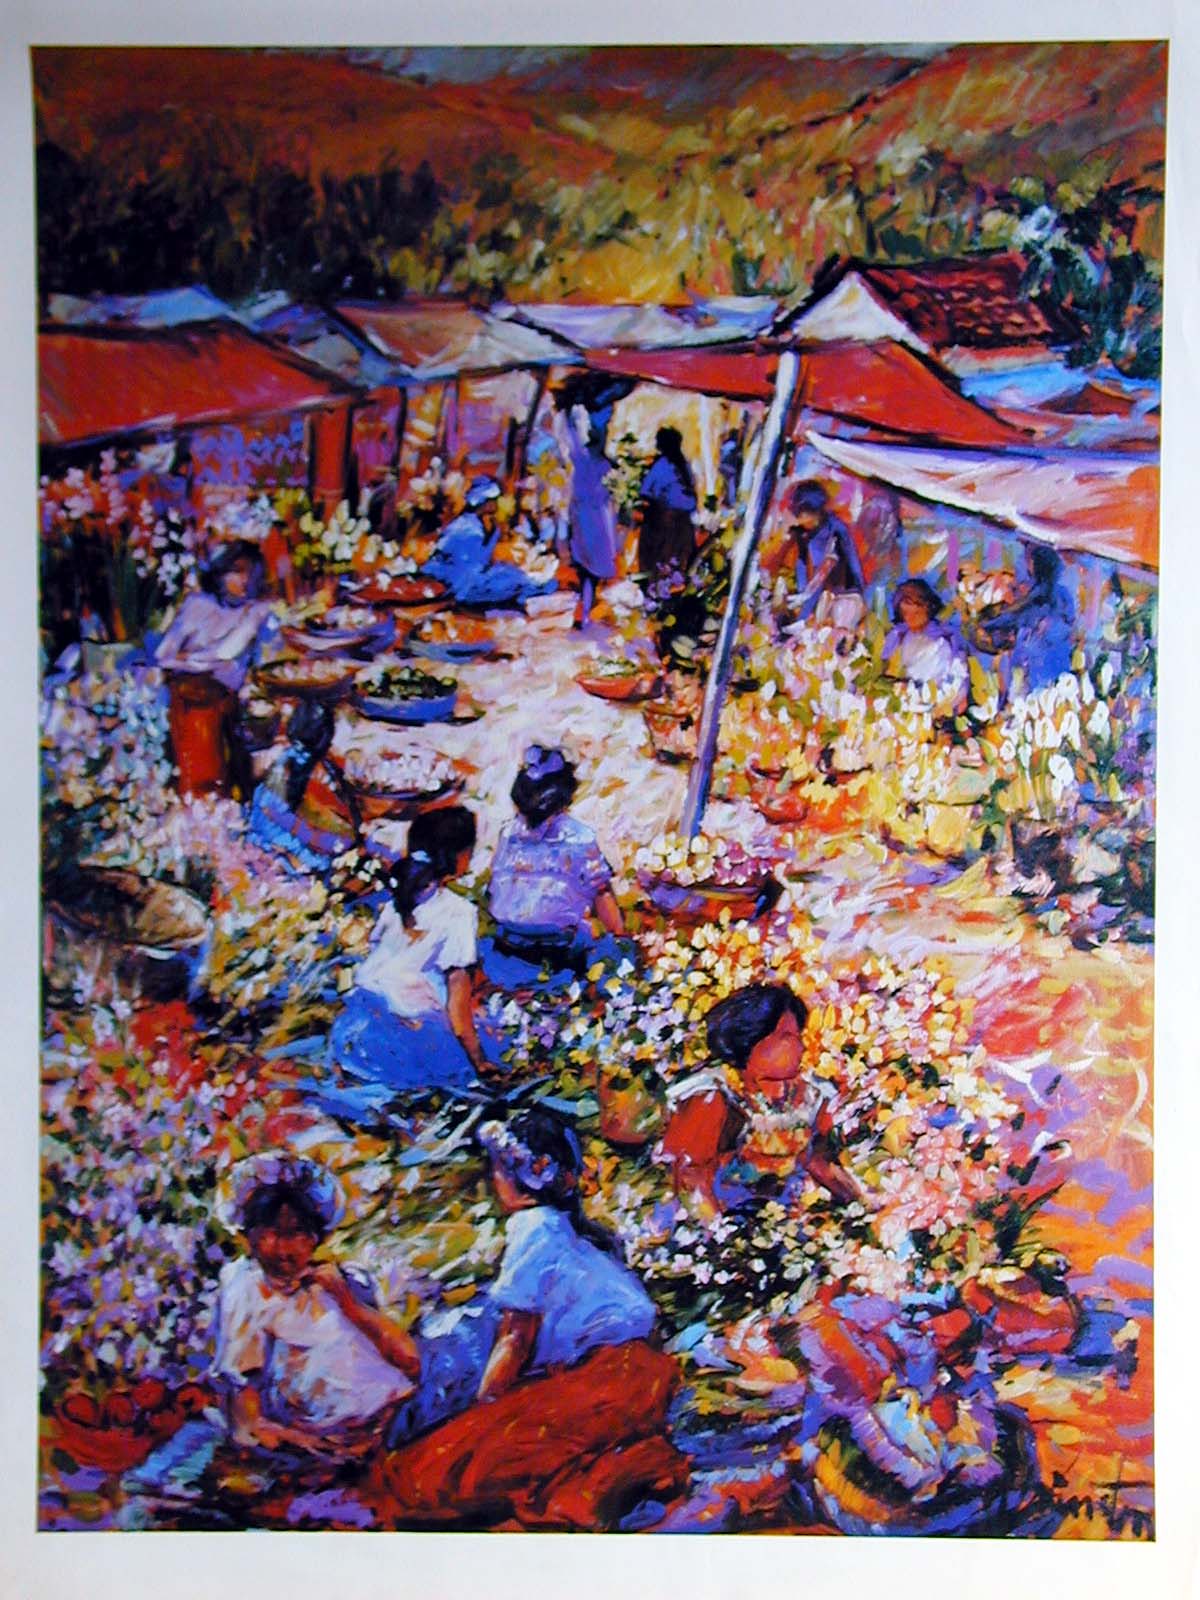 Mercado al sol - Brian M. Johnston - North American Impressionist Artist - 21.5" x 28" limited edition print - US$35.